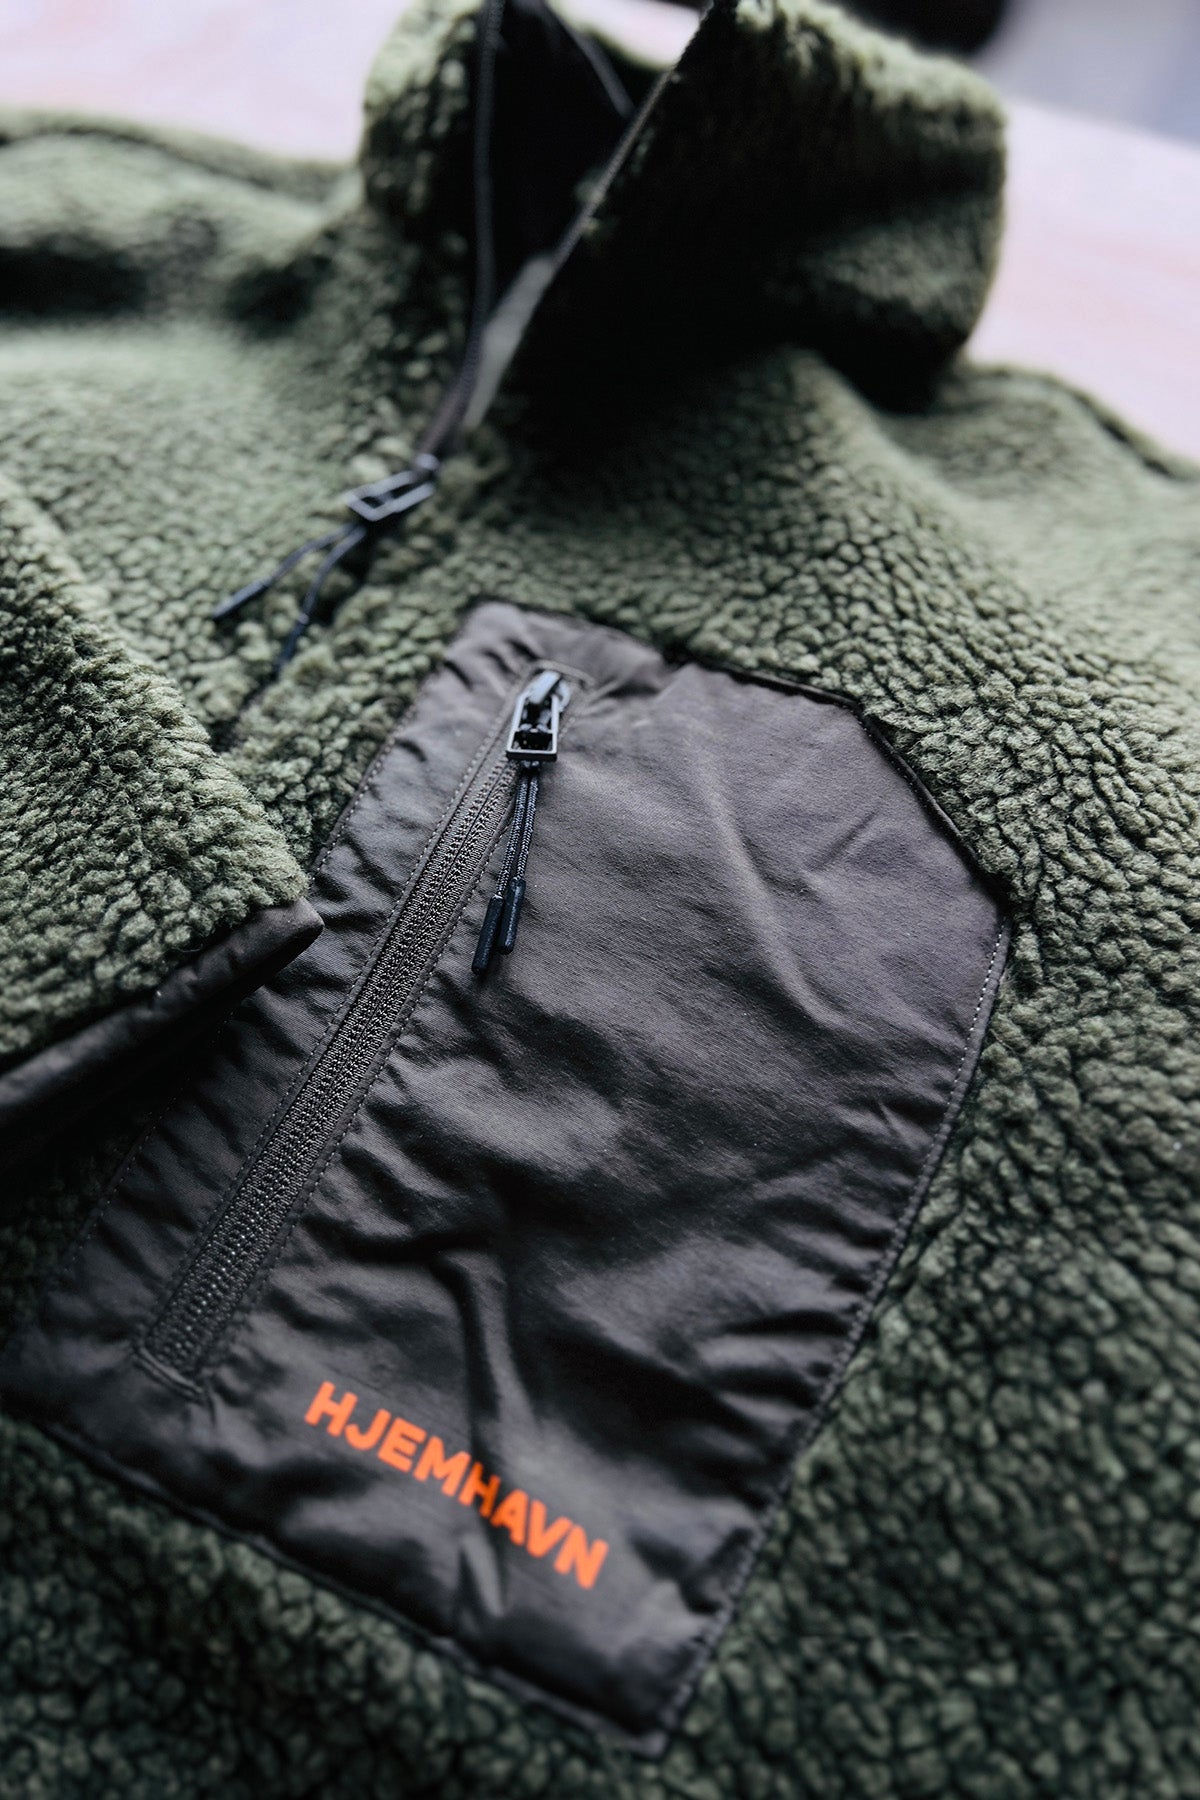 Sherpa Jacket - Green